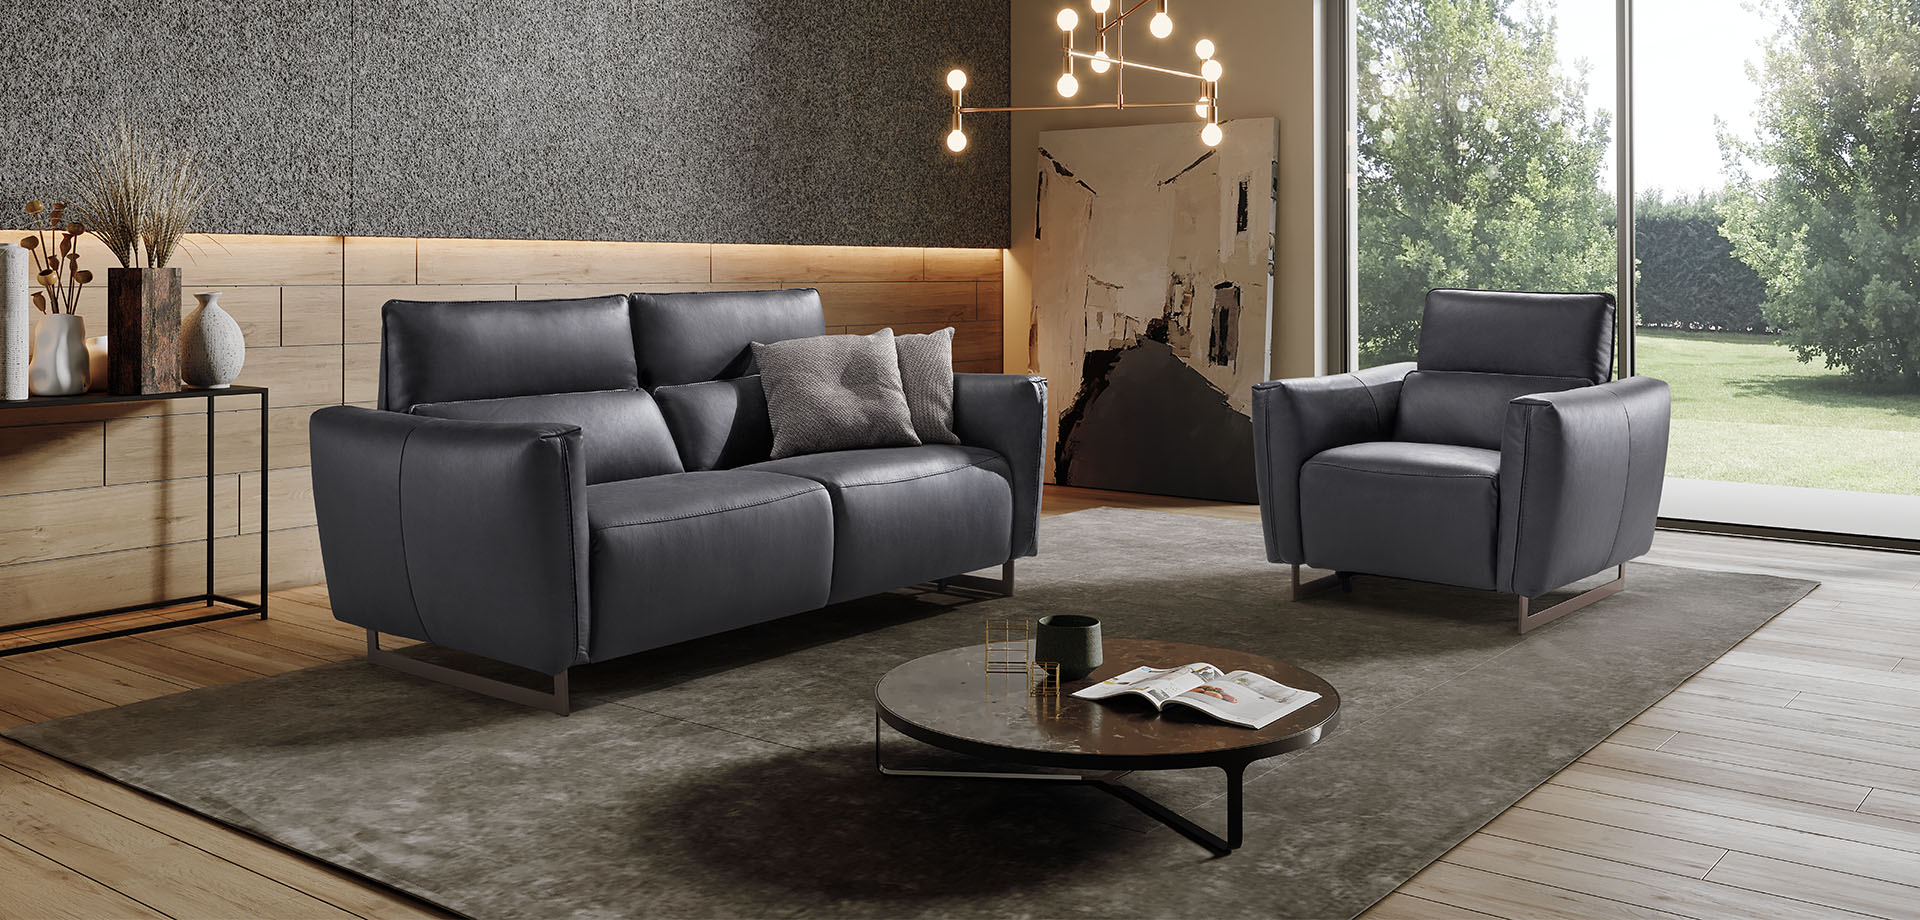 Modular Baccarat Leather Sofa Italia